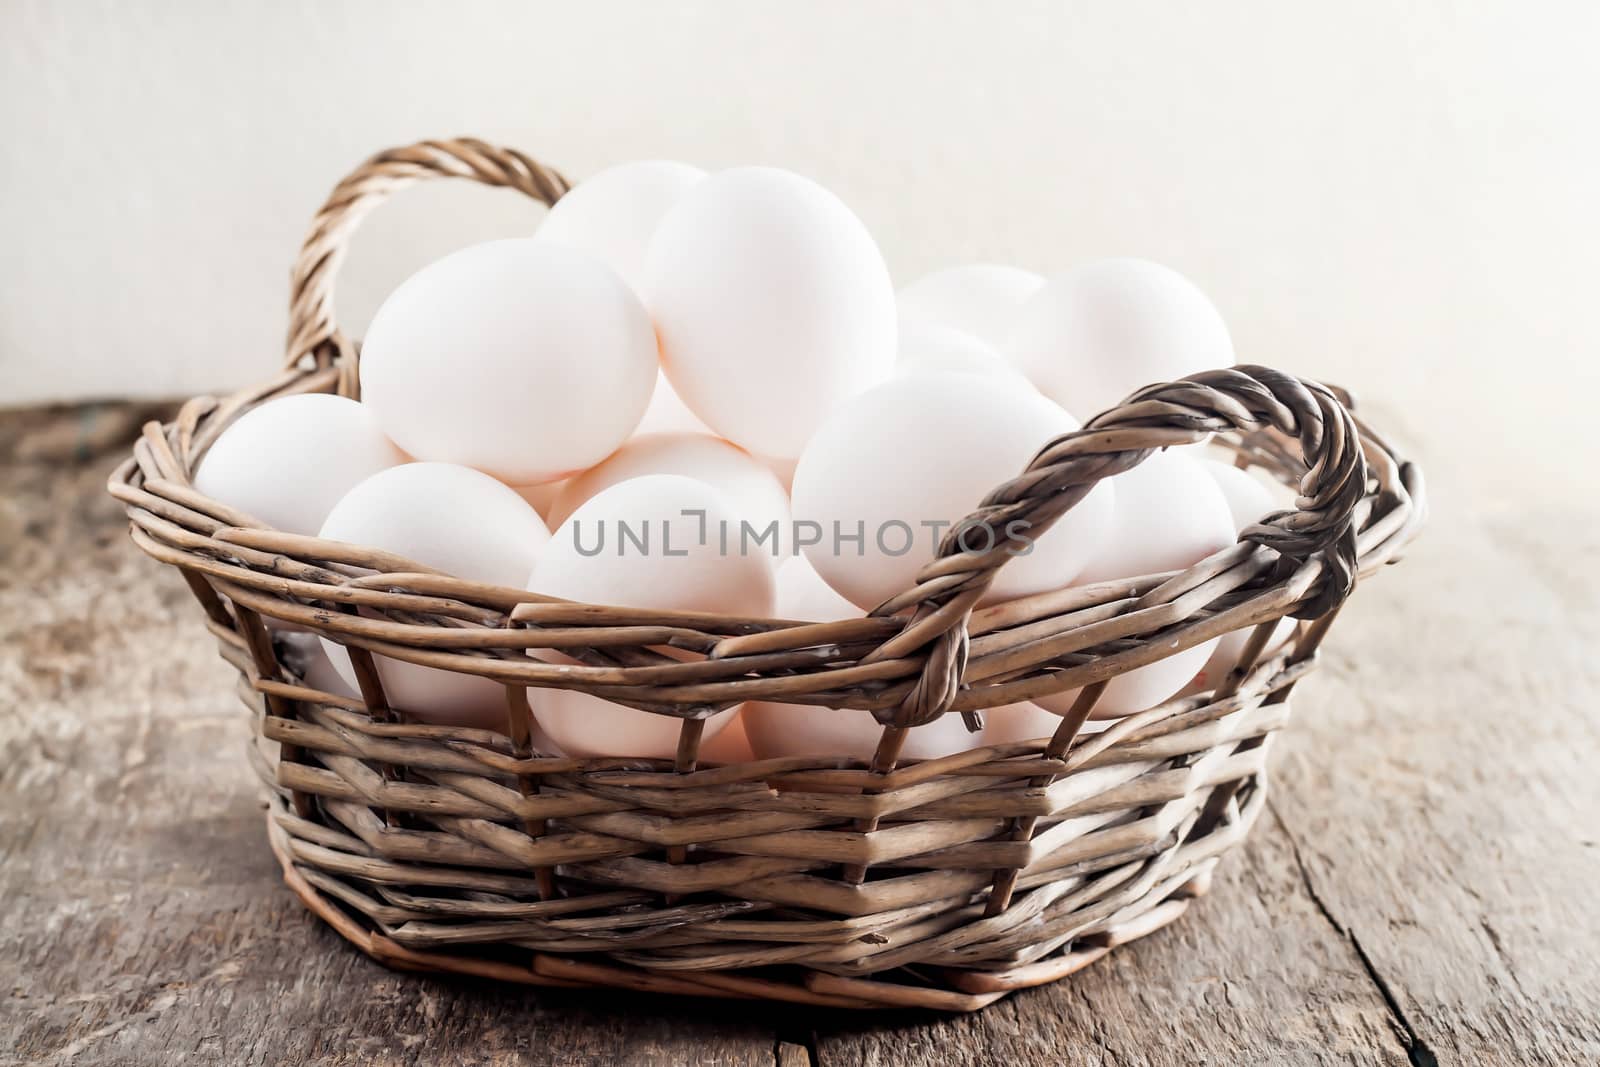 Chicken eggs in the basket on wooden background.